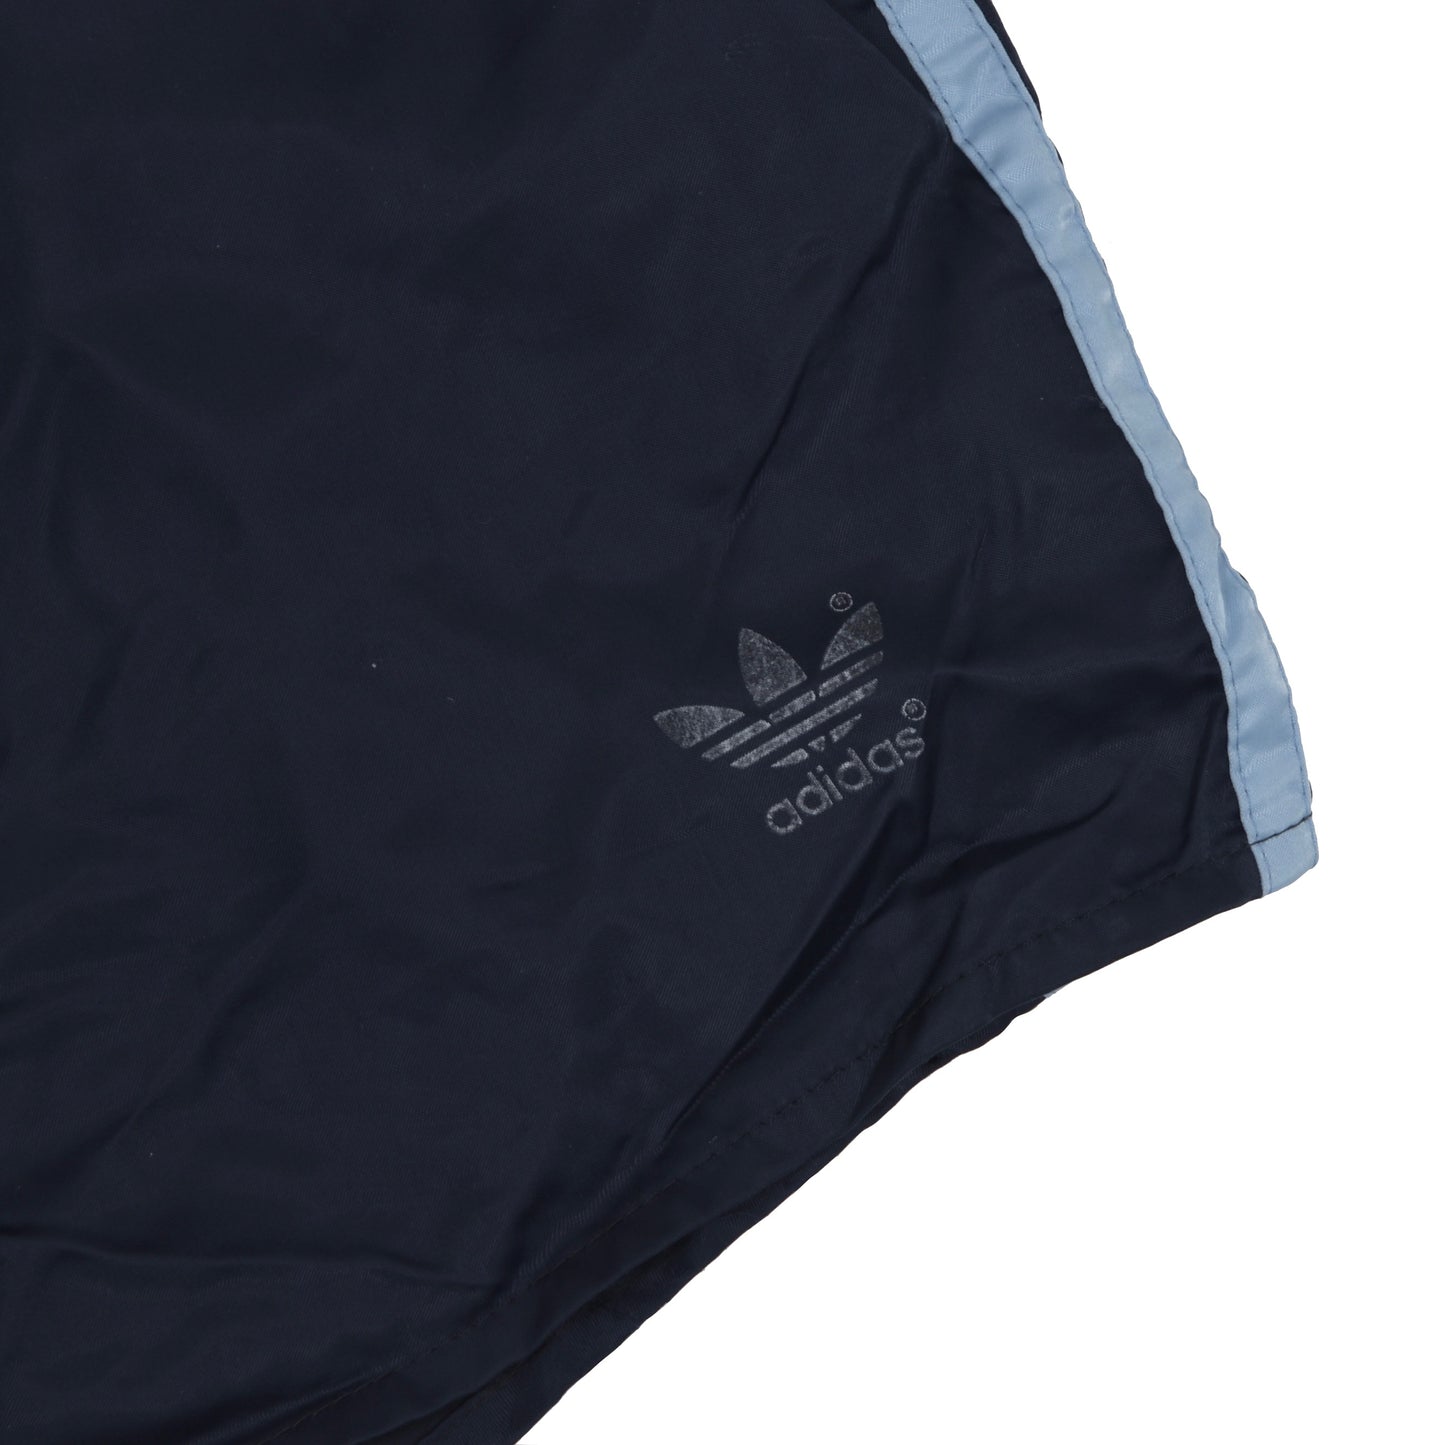 Vintage Adidas Sprinter Shorts Size D5 - Navy